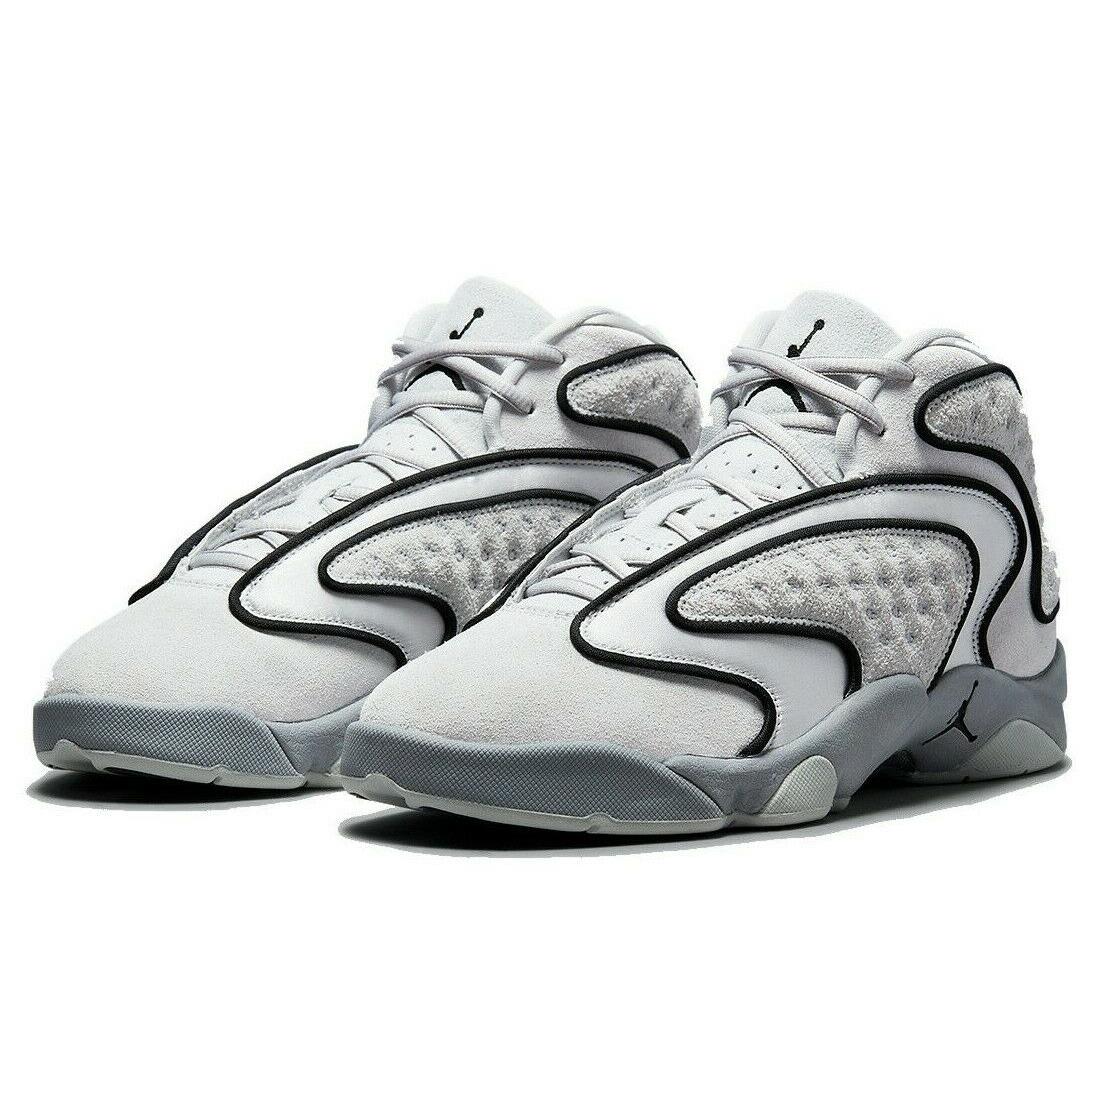 Nike Air Jordan OG Retro Womens Size 7 Sneaker Shoes 133000 002 Cement Gray